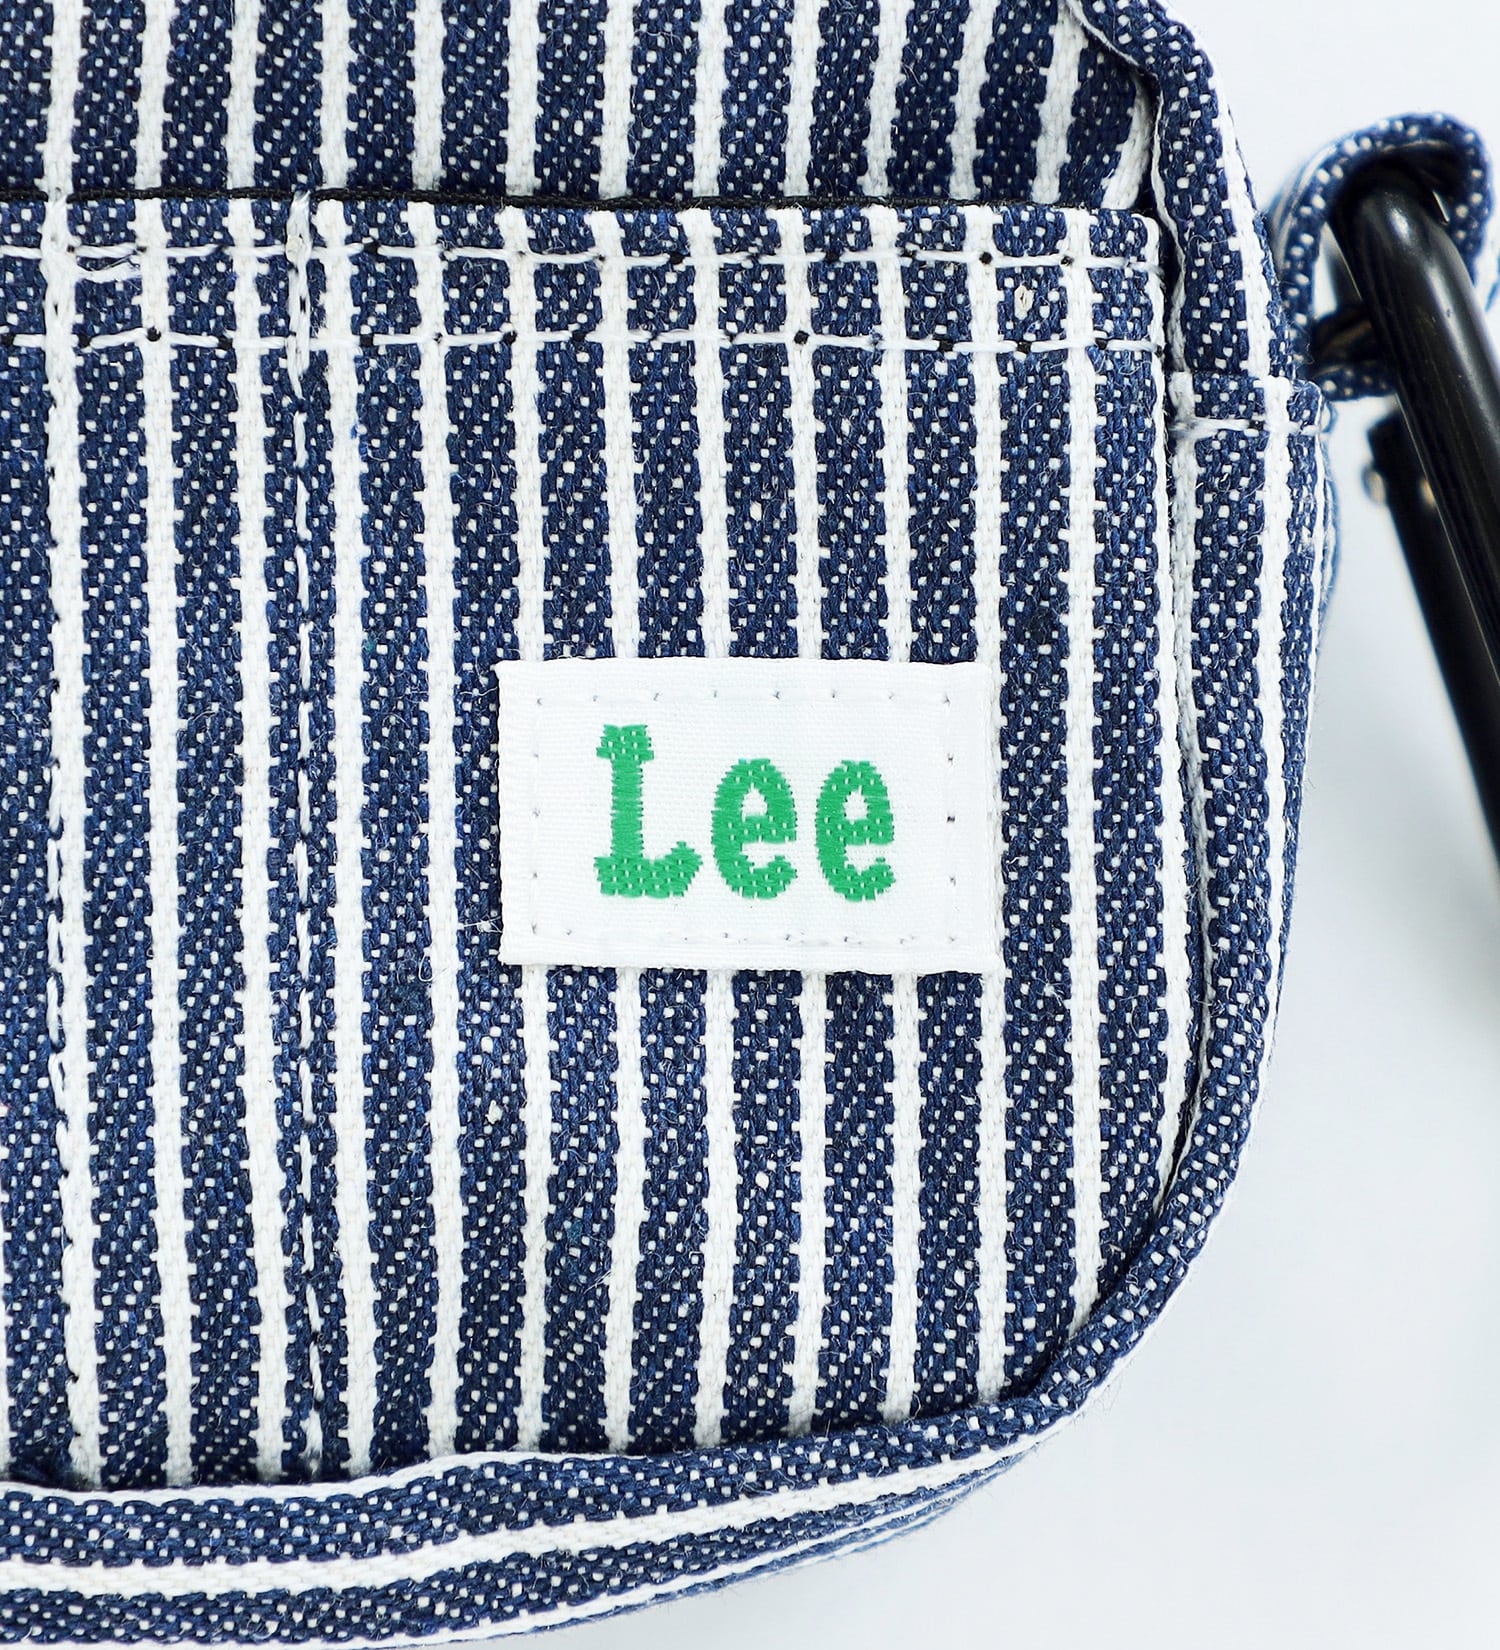 Lee(リー)の【Lee GOLF】ゴルフボールポーチ|ファッション雑貨/ポーチ/メンズ|ヒッコリー